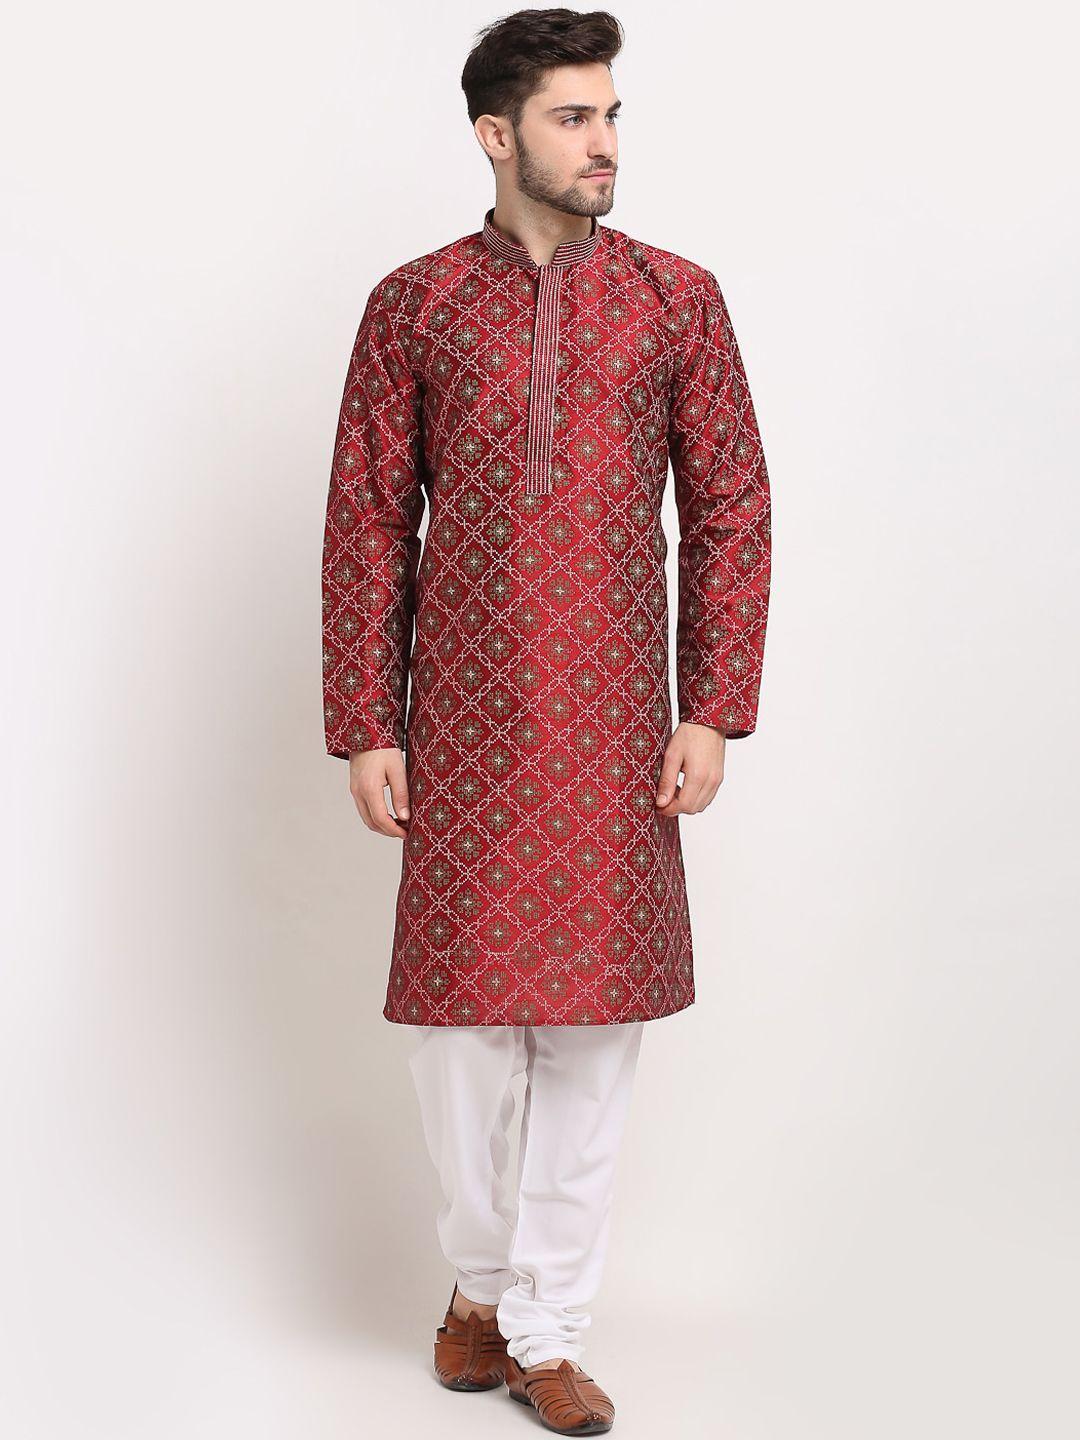 jompers-men-maroon-ethnic-motifs-printed-regular-kurta-with-pyjamas